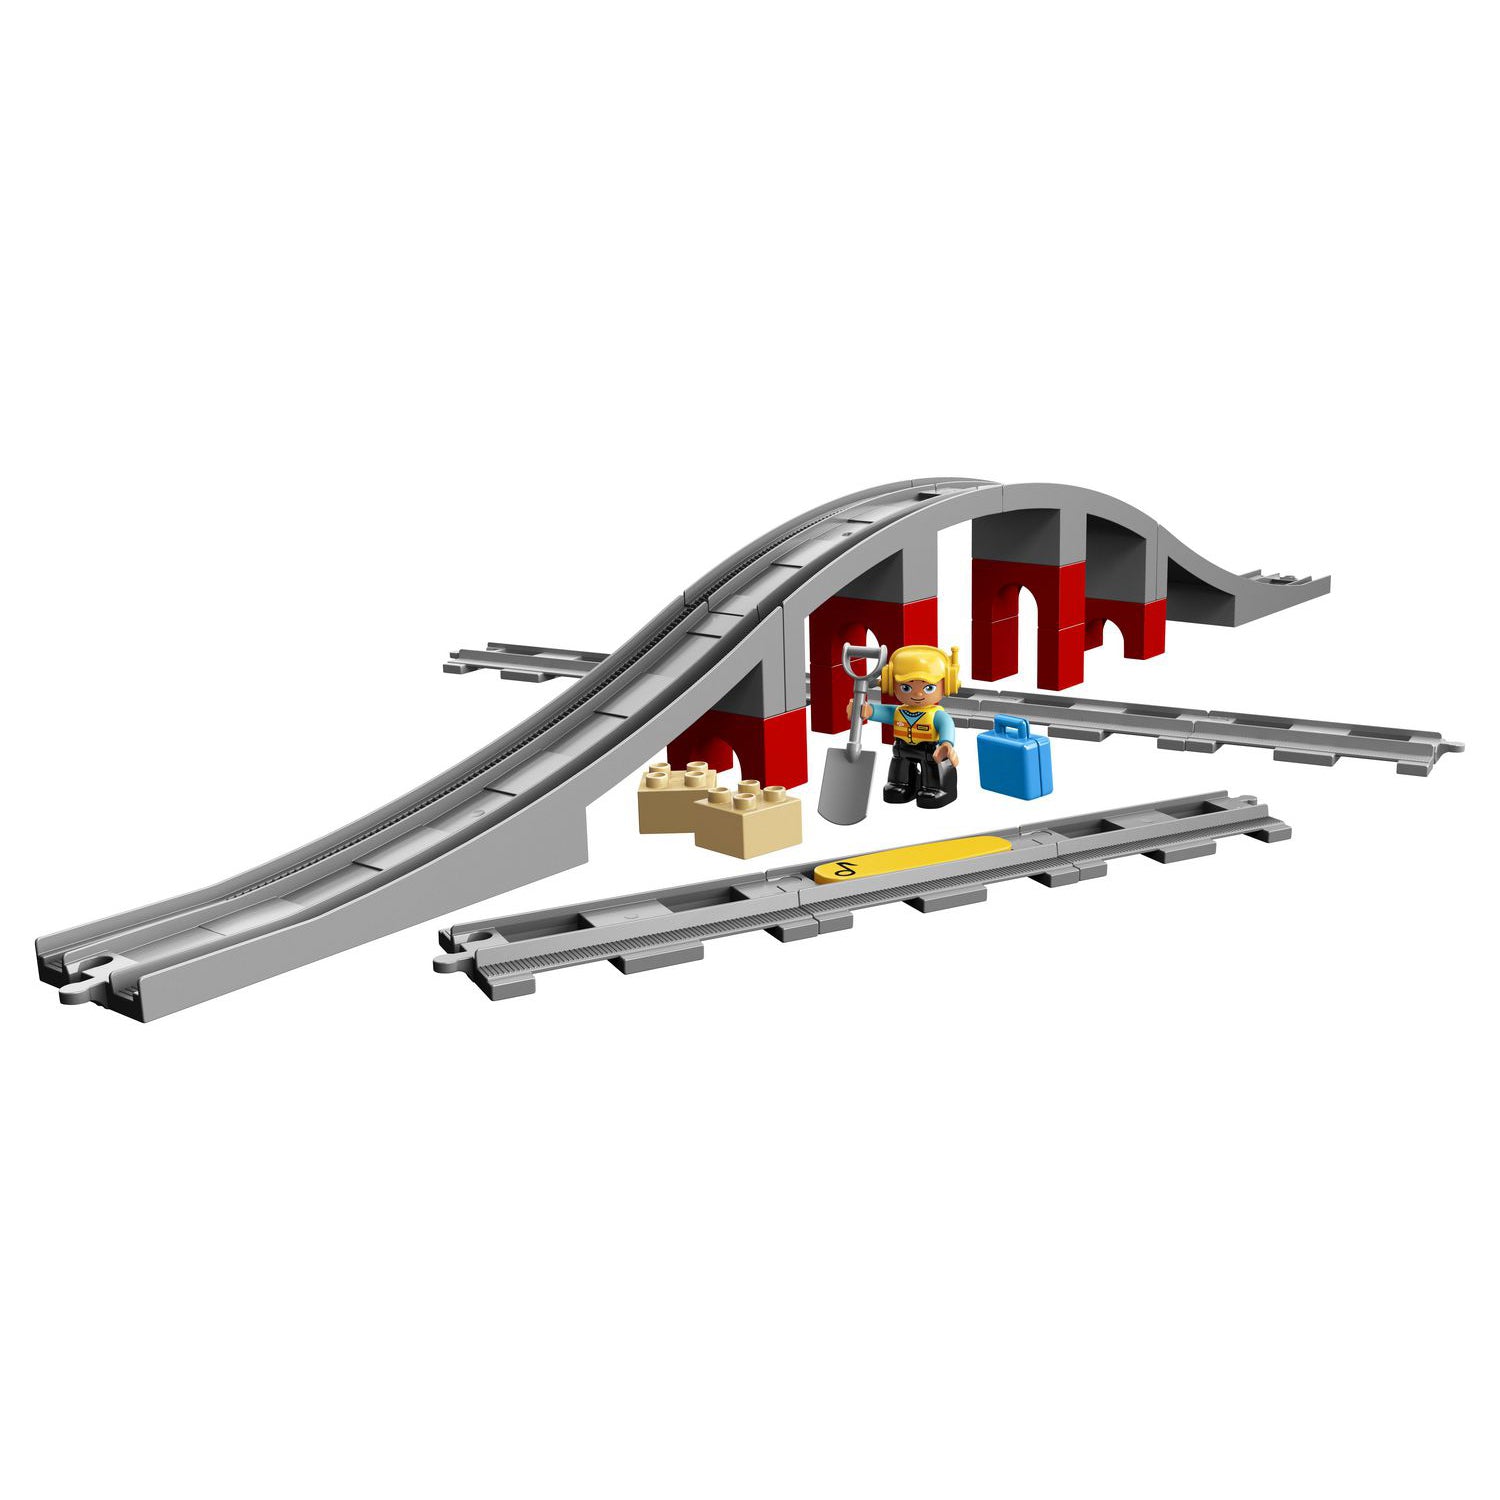 LEGO DUPLO Train Bridge and Tracks [10872 - 26 Pieces]